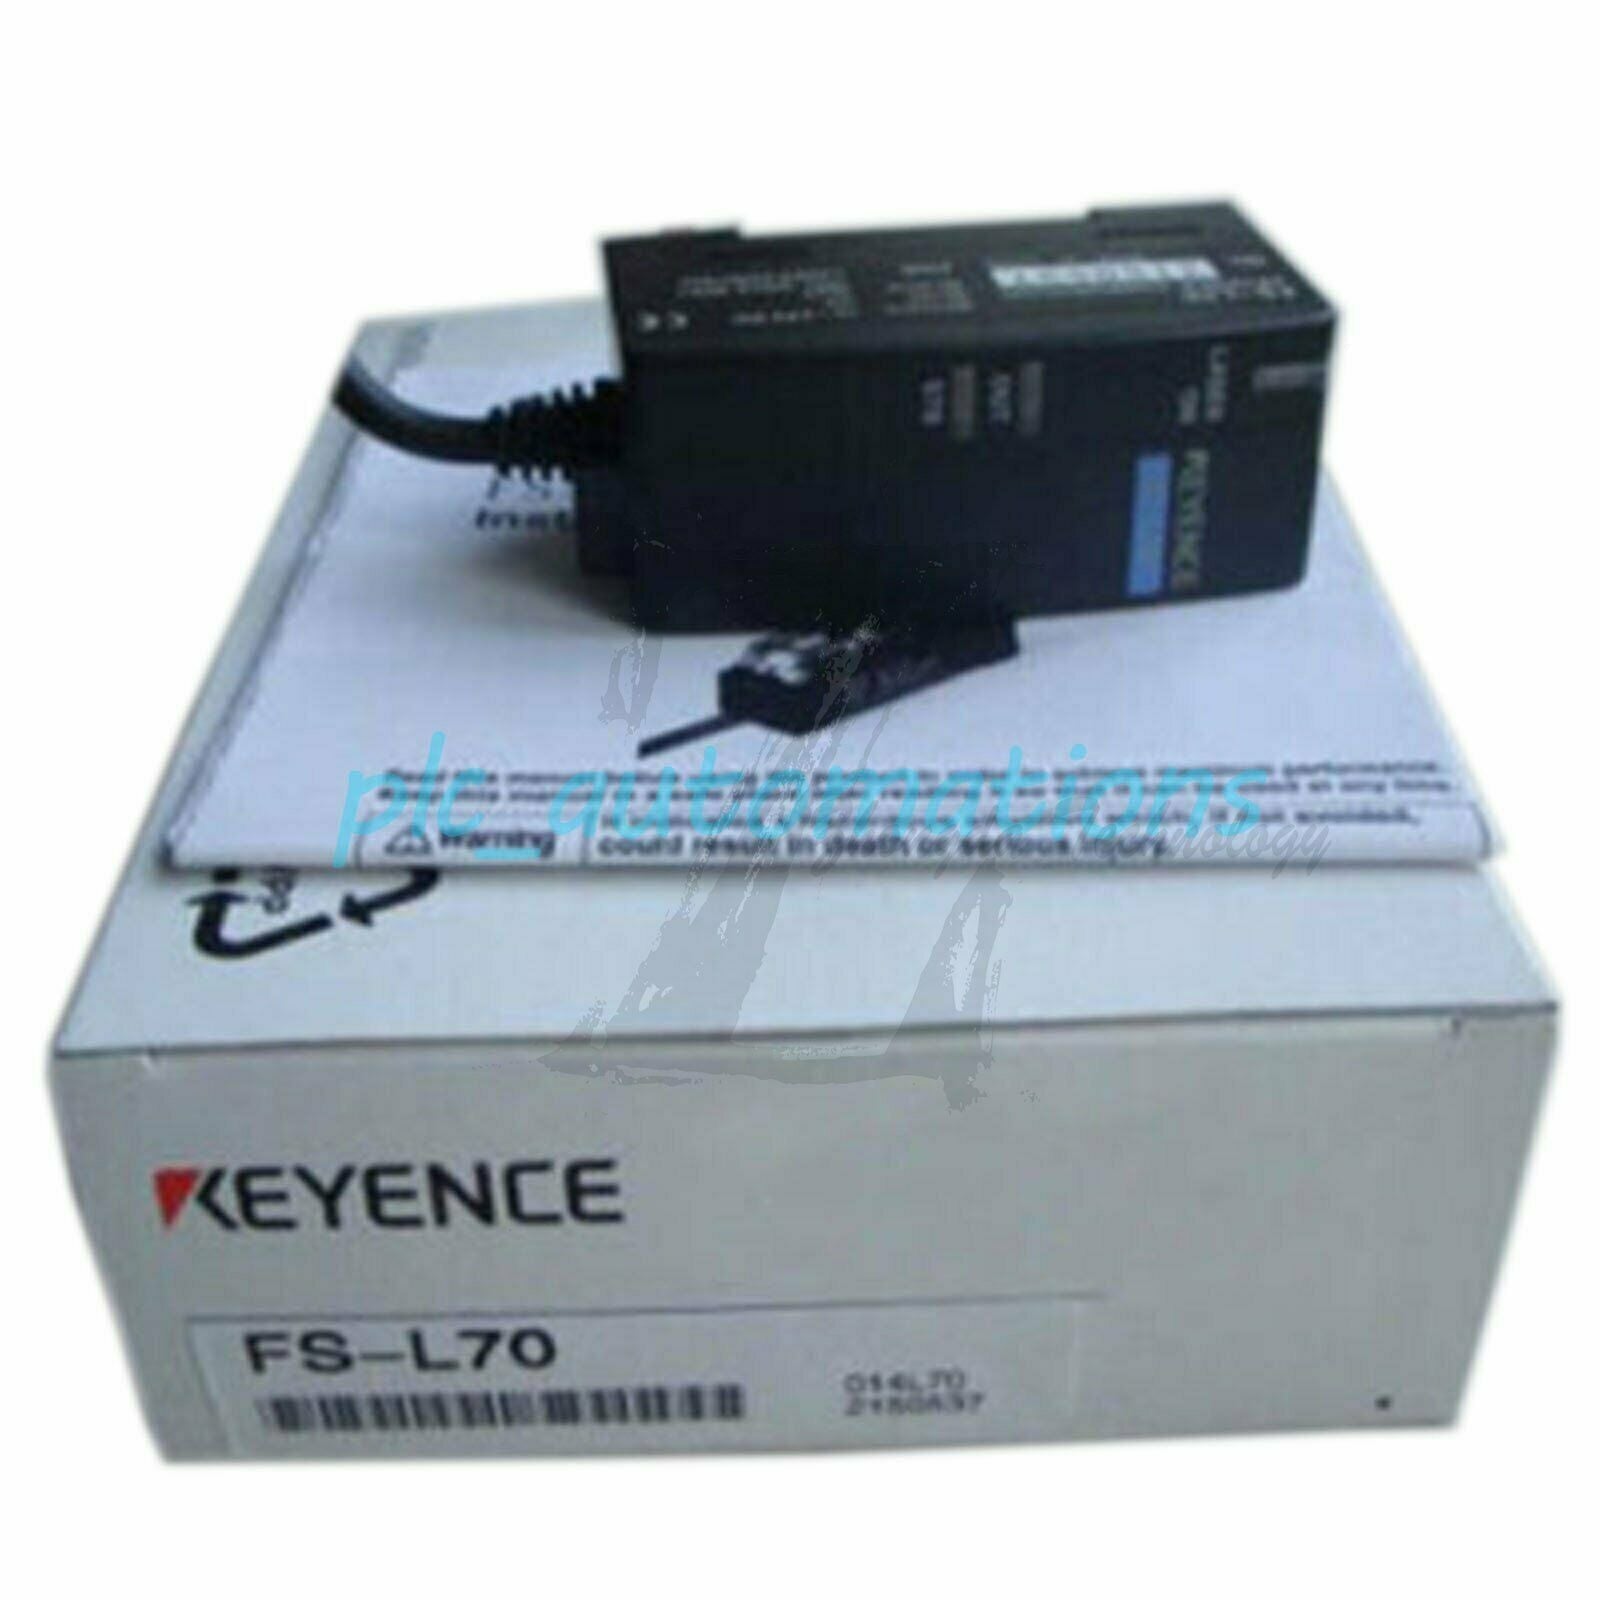 1pcs NEW KEYENCE FS-L70 optical fiber amplifier KOEED 201-500, 90%, import_2020_10_10_031751, Keyence, Other, validate-product-description